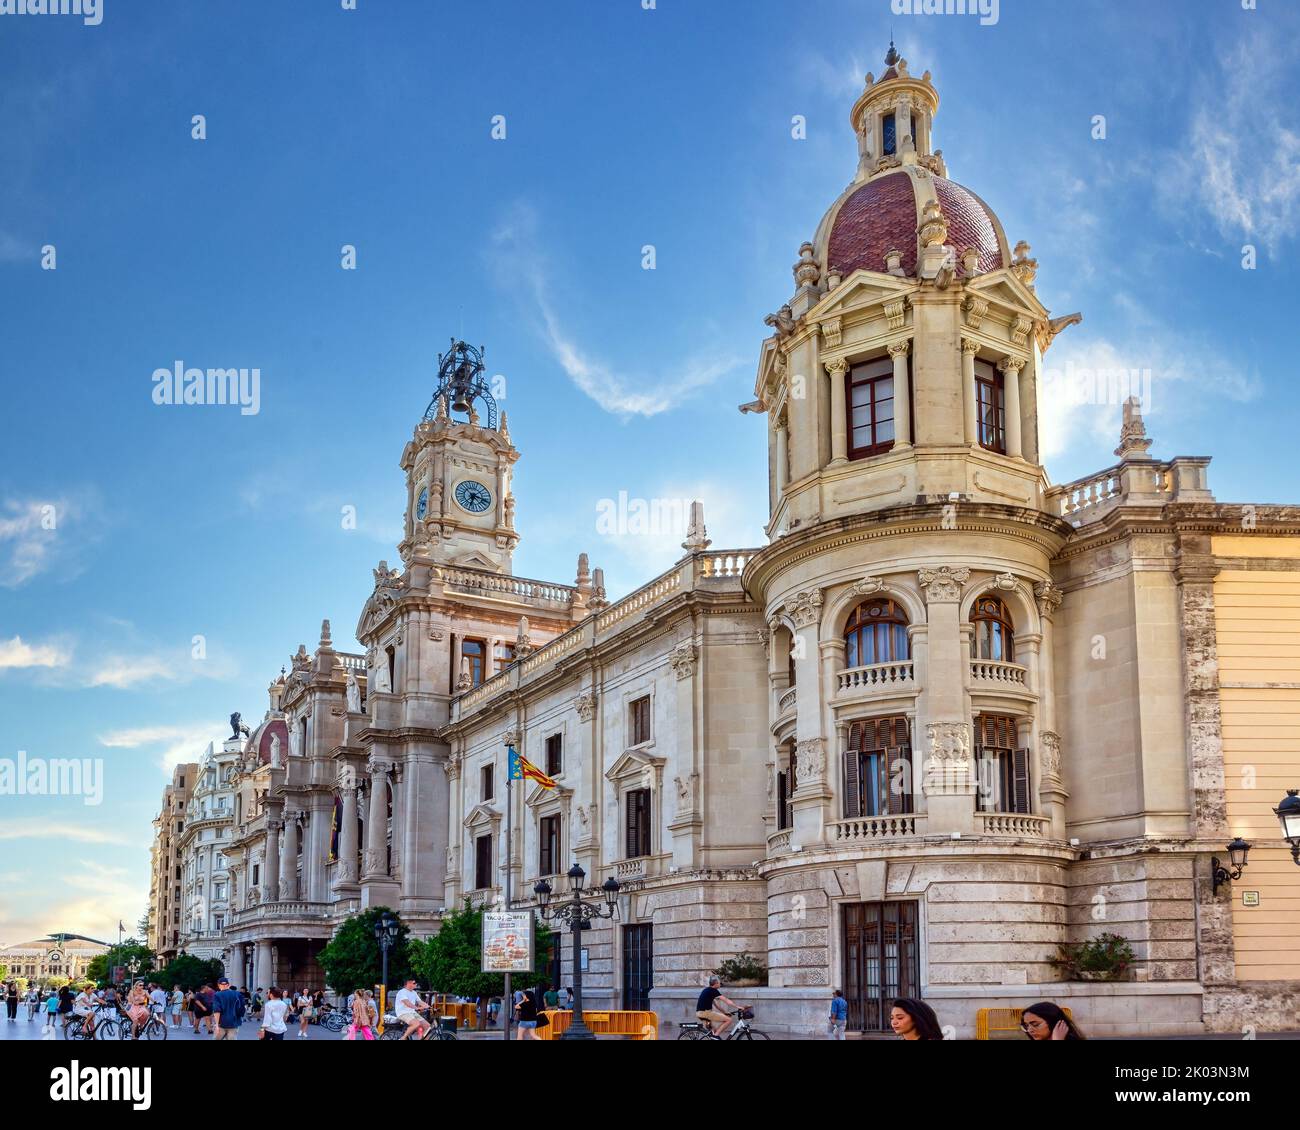 Valencia Town Hall Square, Spain Stock Photo